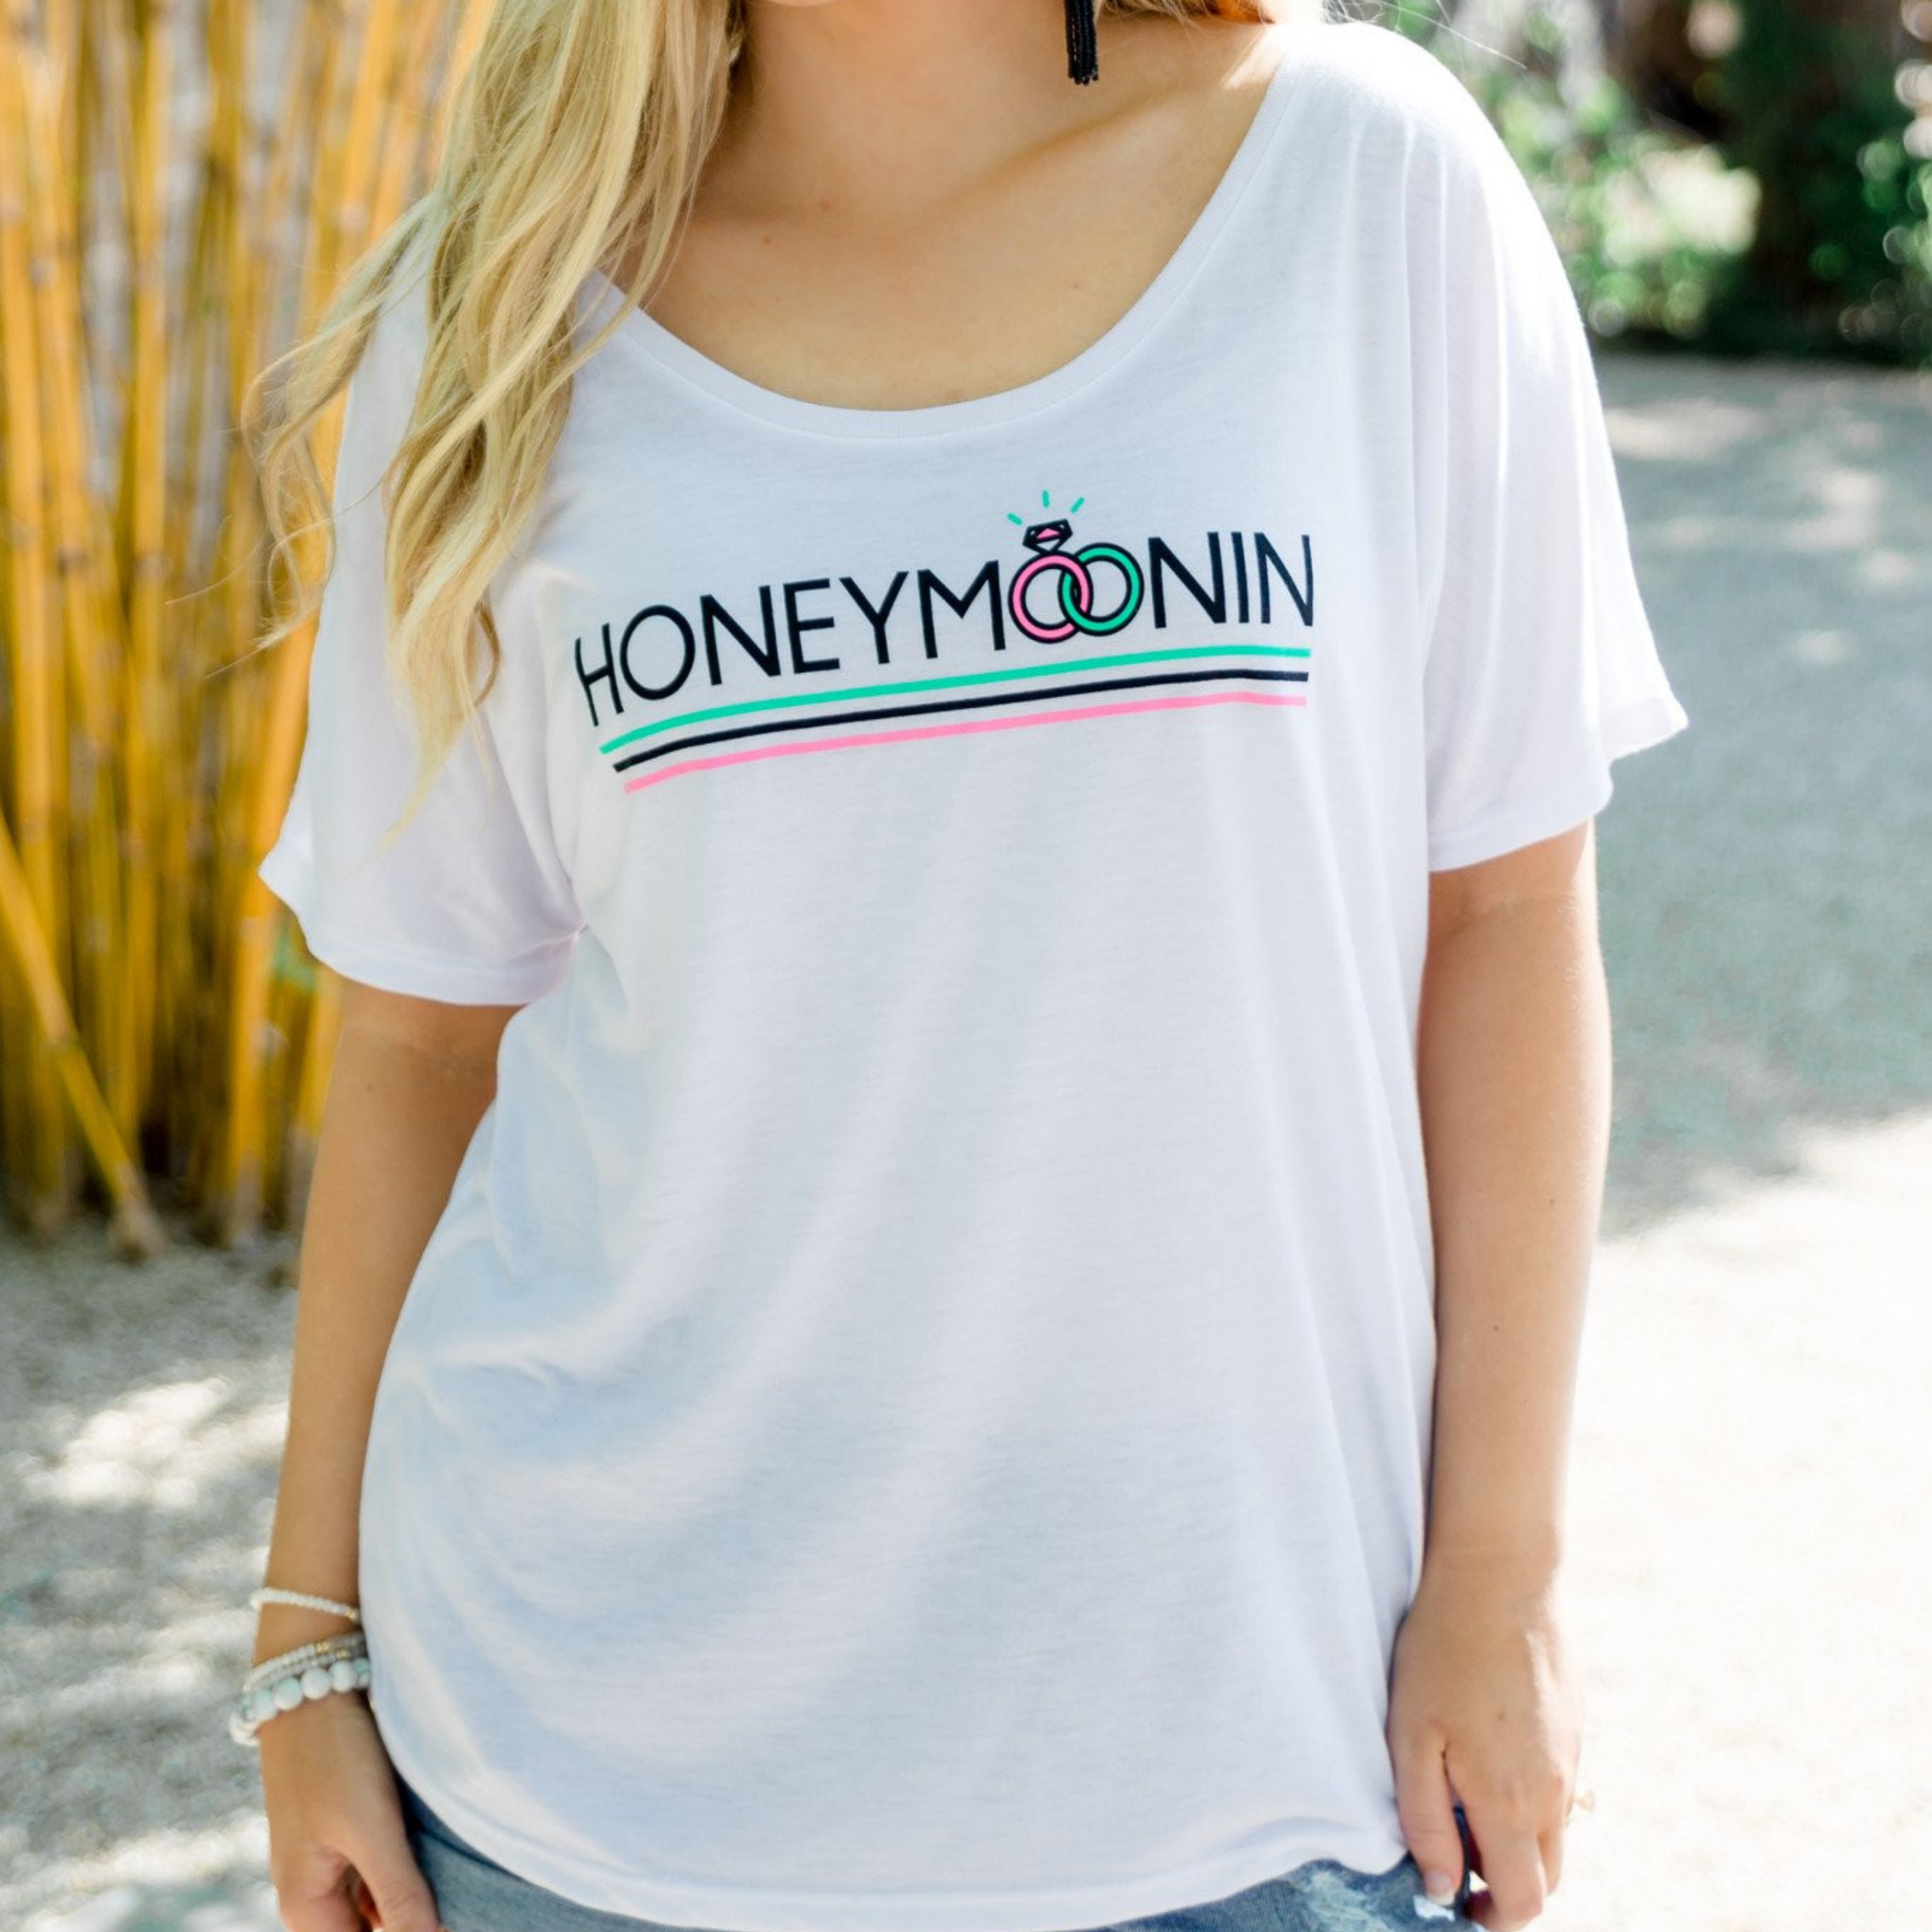 Honeymoonin' Short Sleeve Dolman Shirt - Giddy Up Glamour Boutique